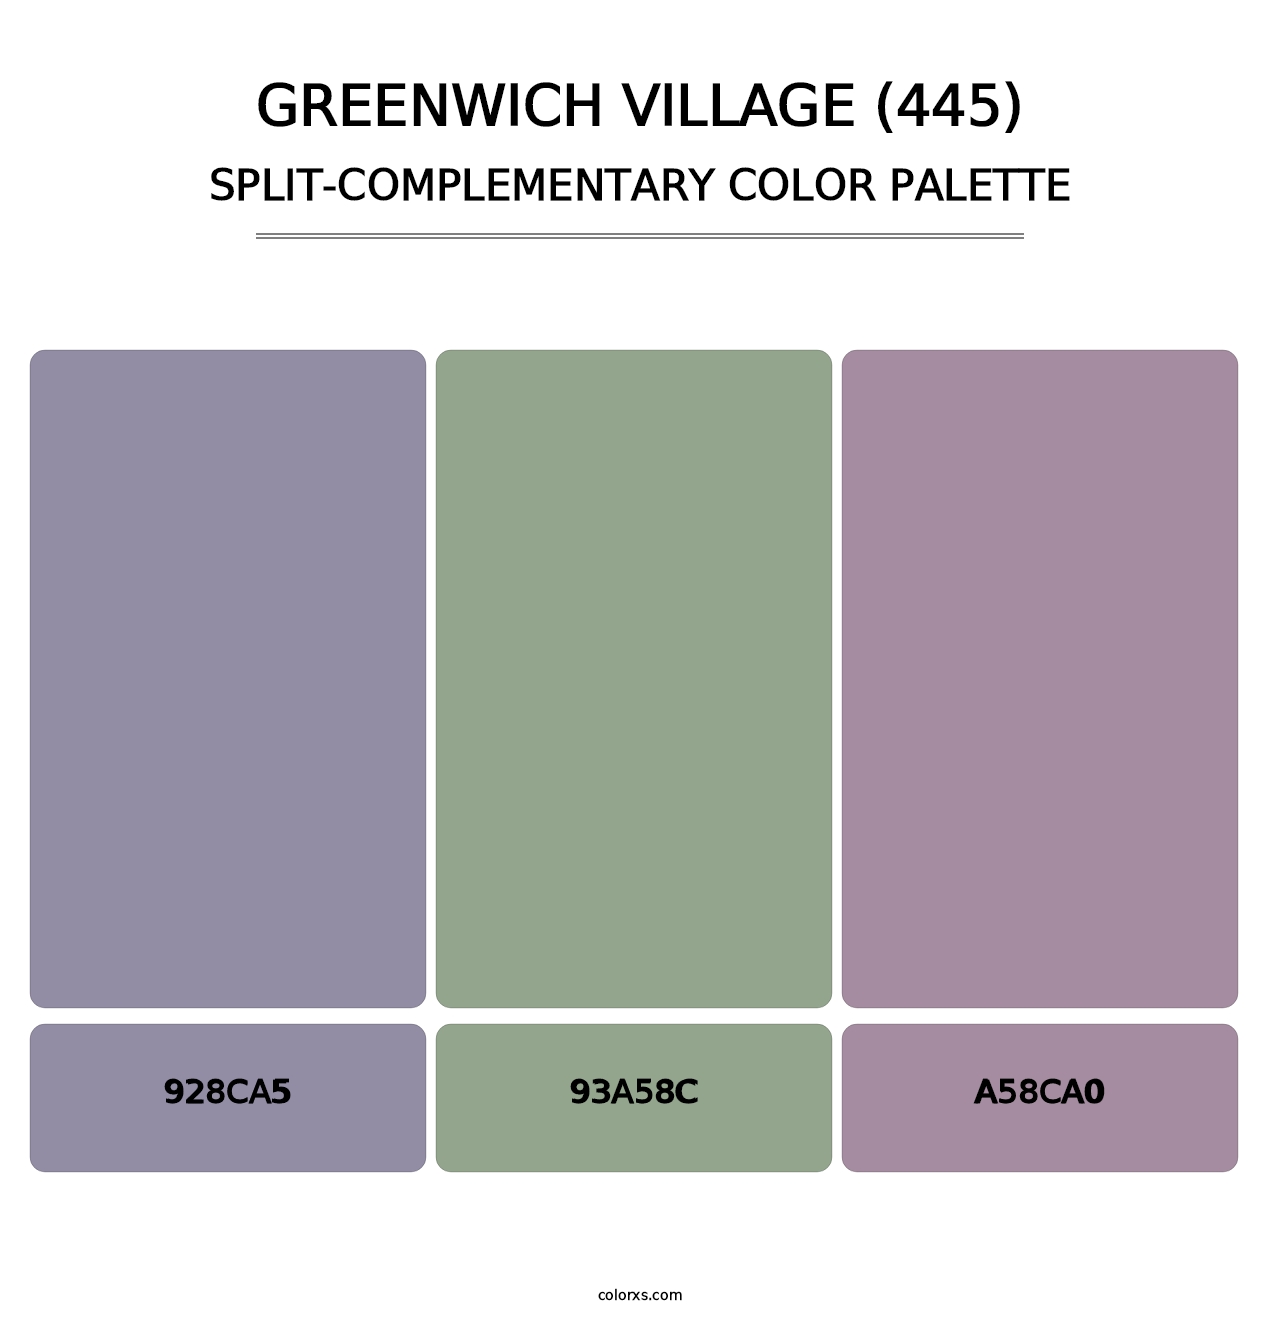 Greenwich Village (445) - Split-Complementary Color Palette